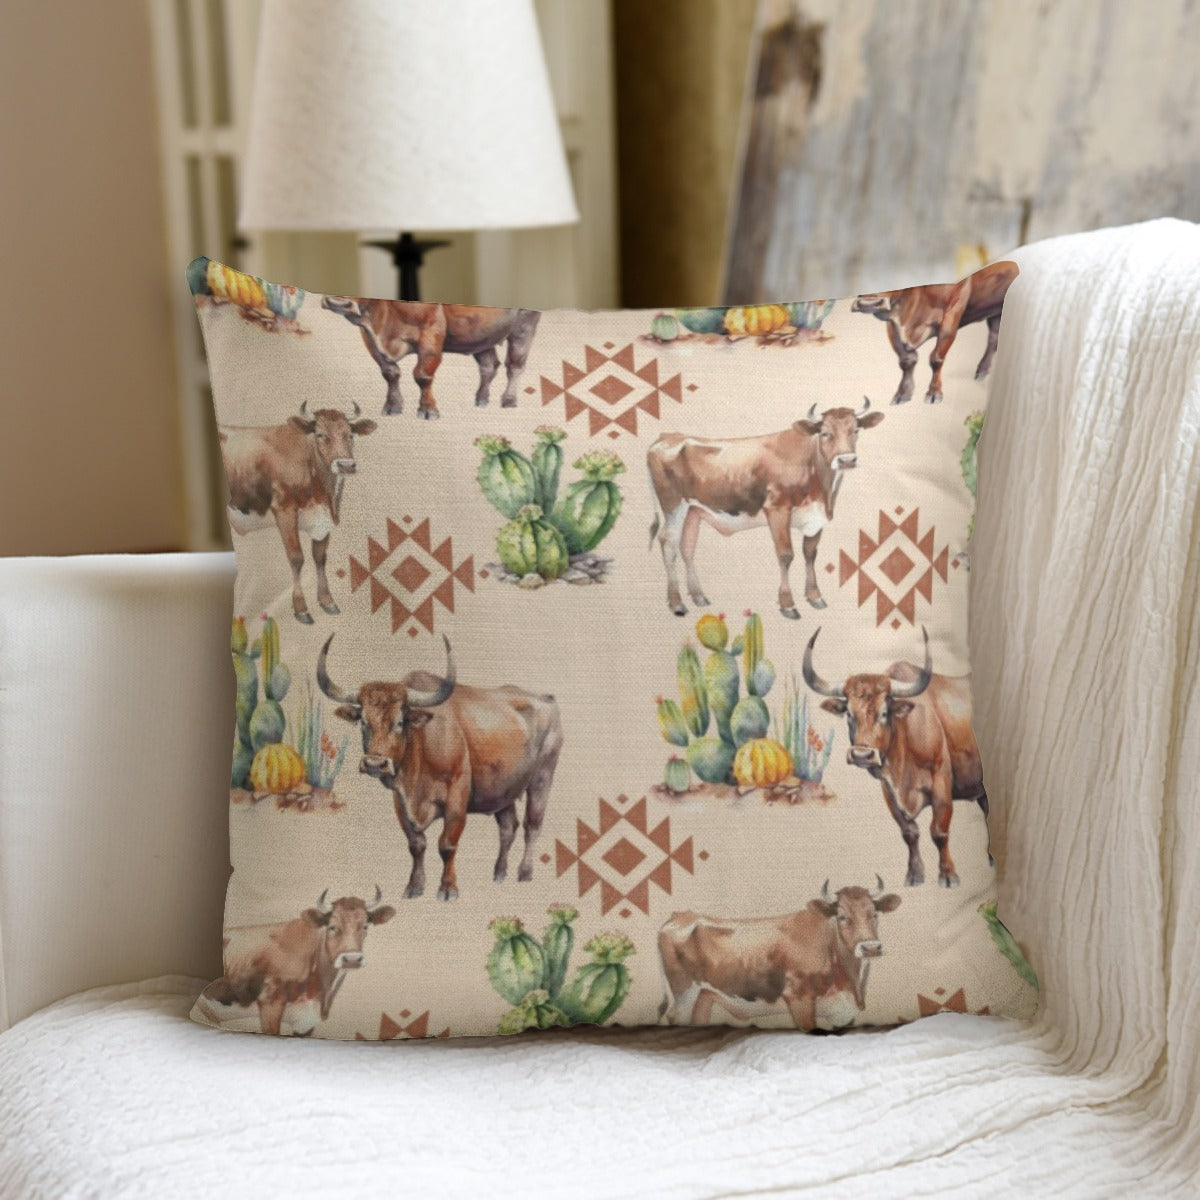 Longhorn Cactus Aztec pillow with pillow Inserts